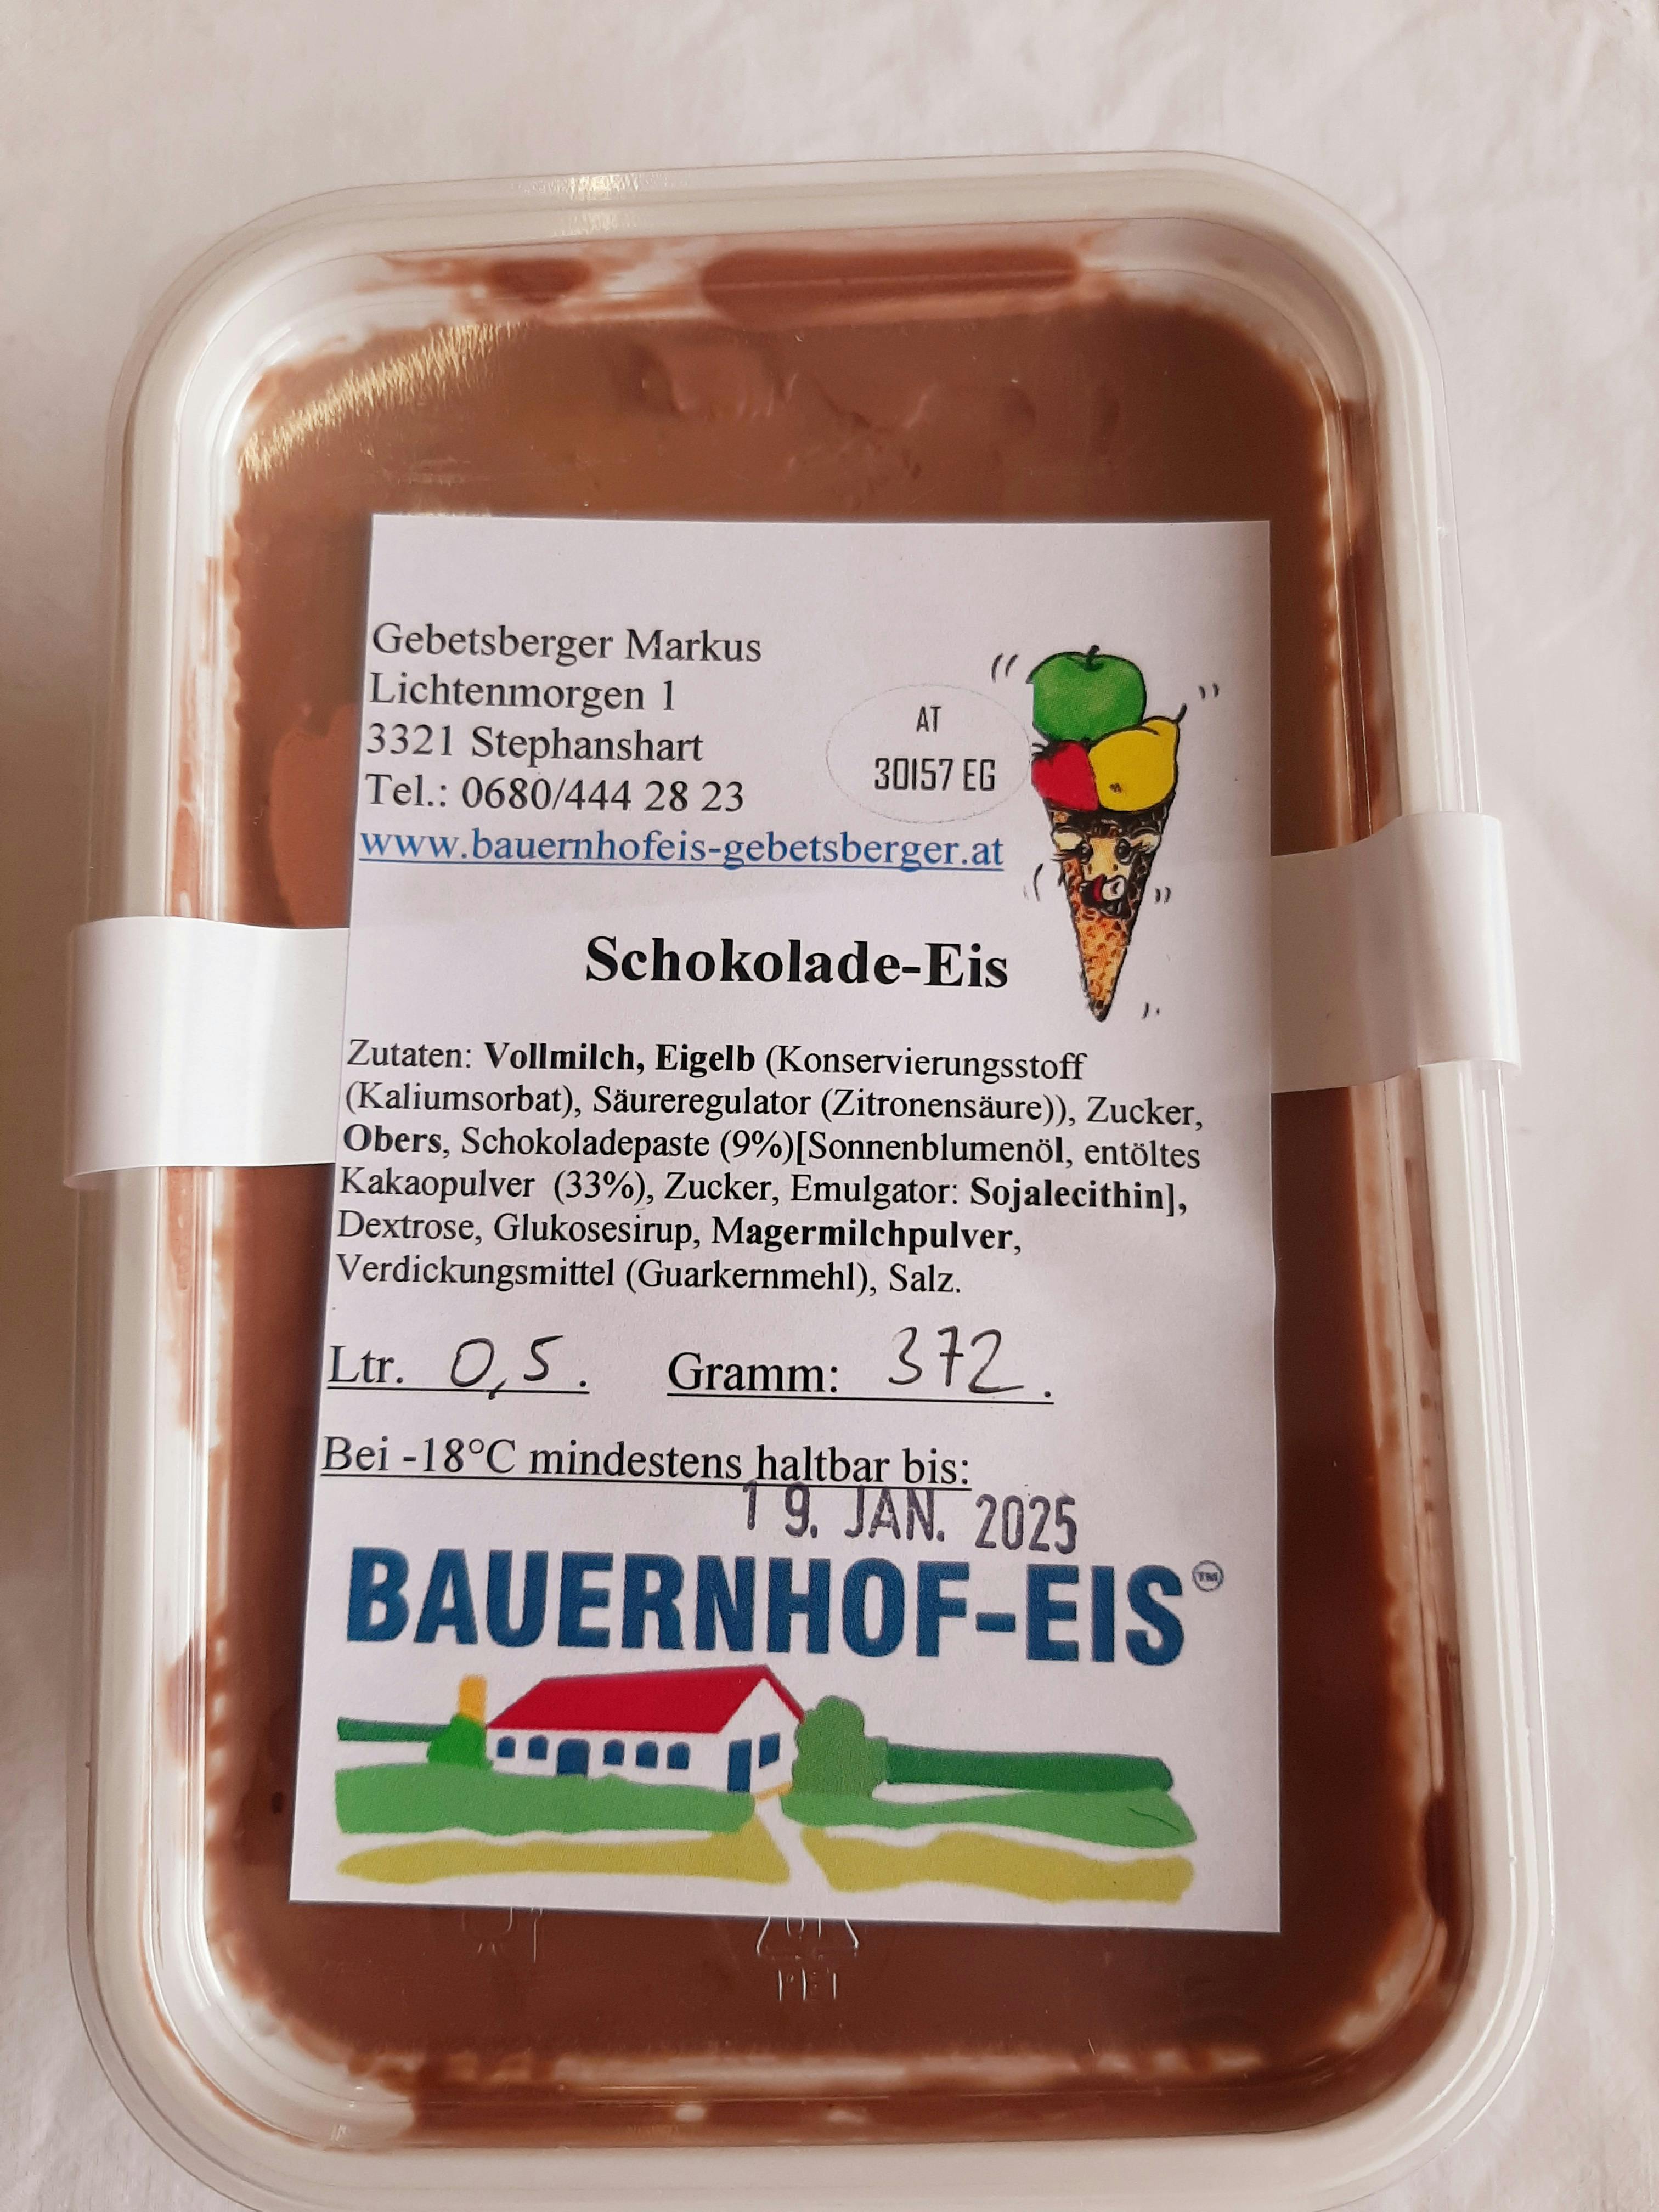 Bauernhofeis - cremiges Schokoladeneis